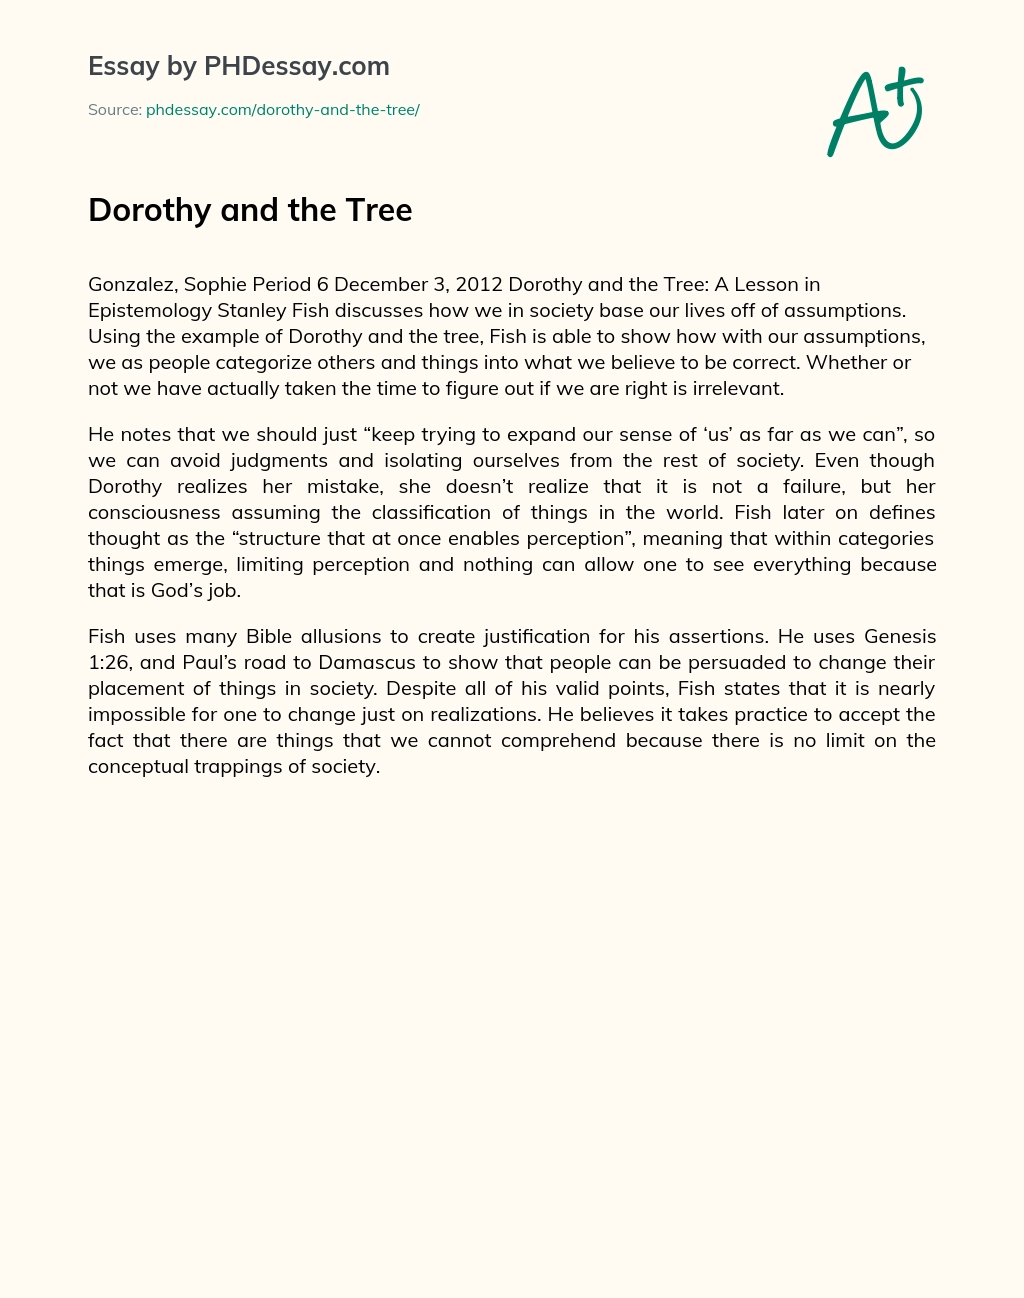 Dorothy and the Tree essay